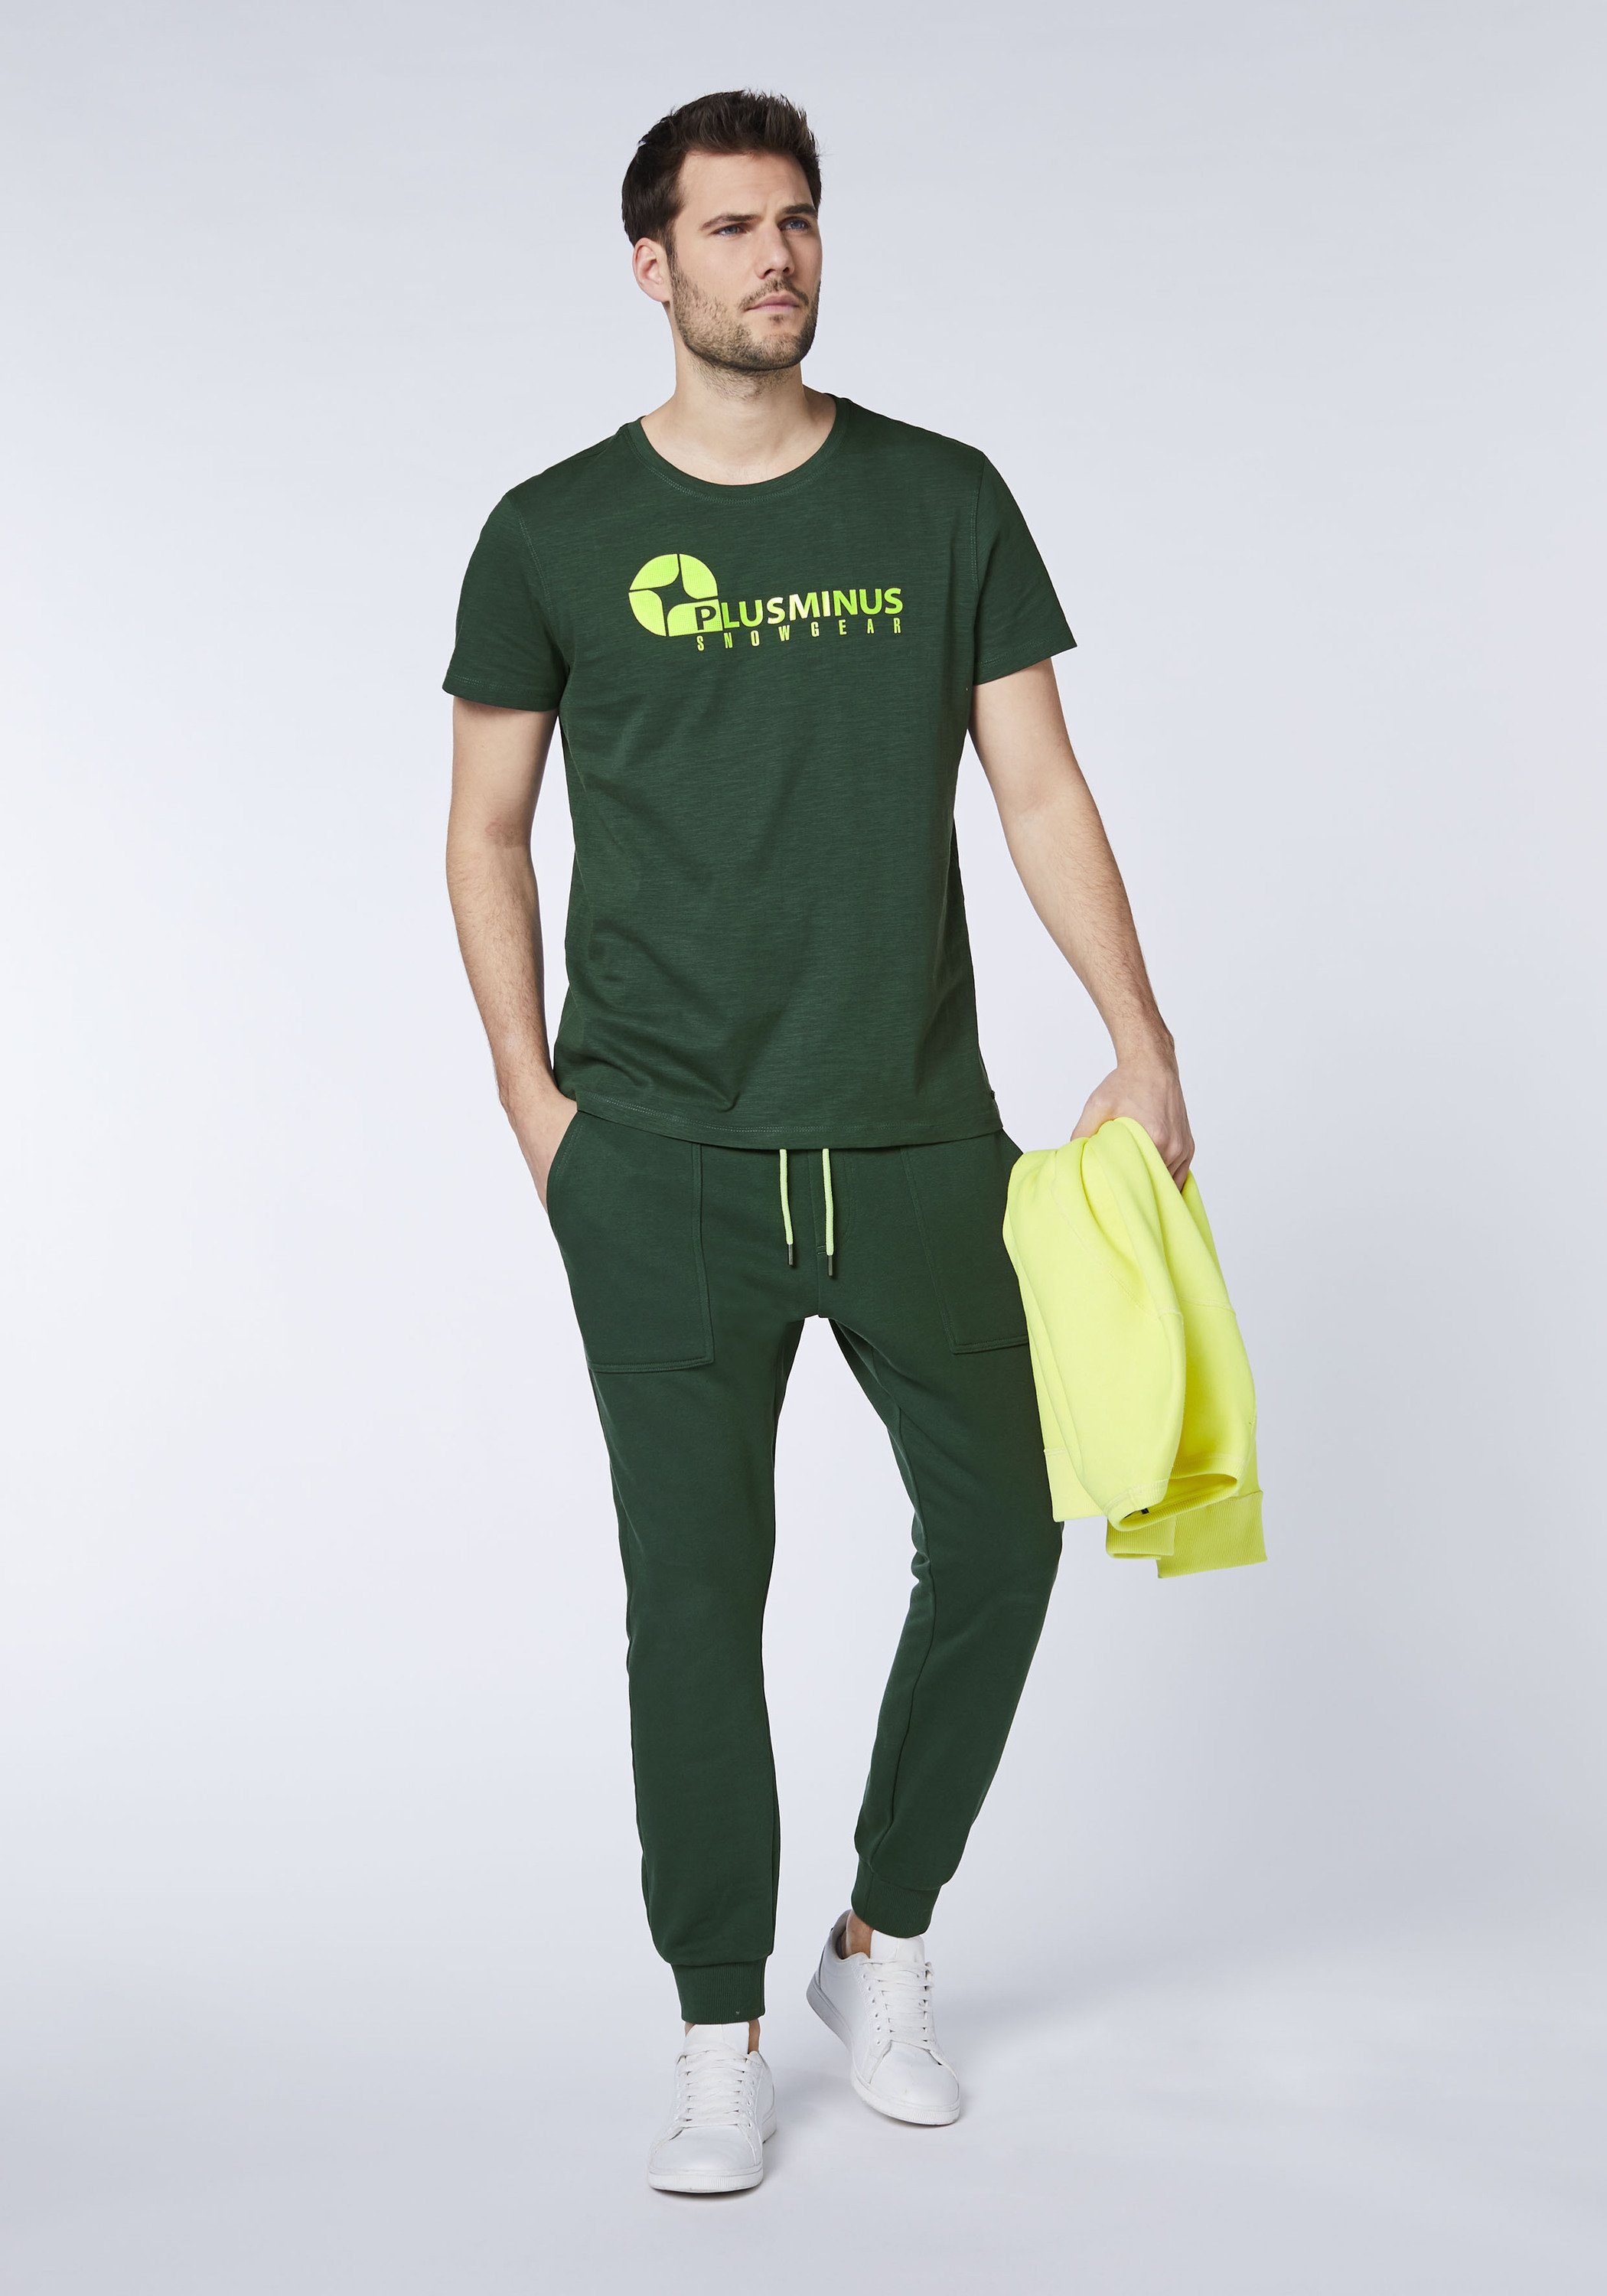 Chiemsee Print-Shirt T-Shirt im PLUS-MINUS-Design Green Gables 1